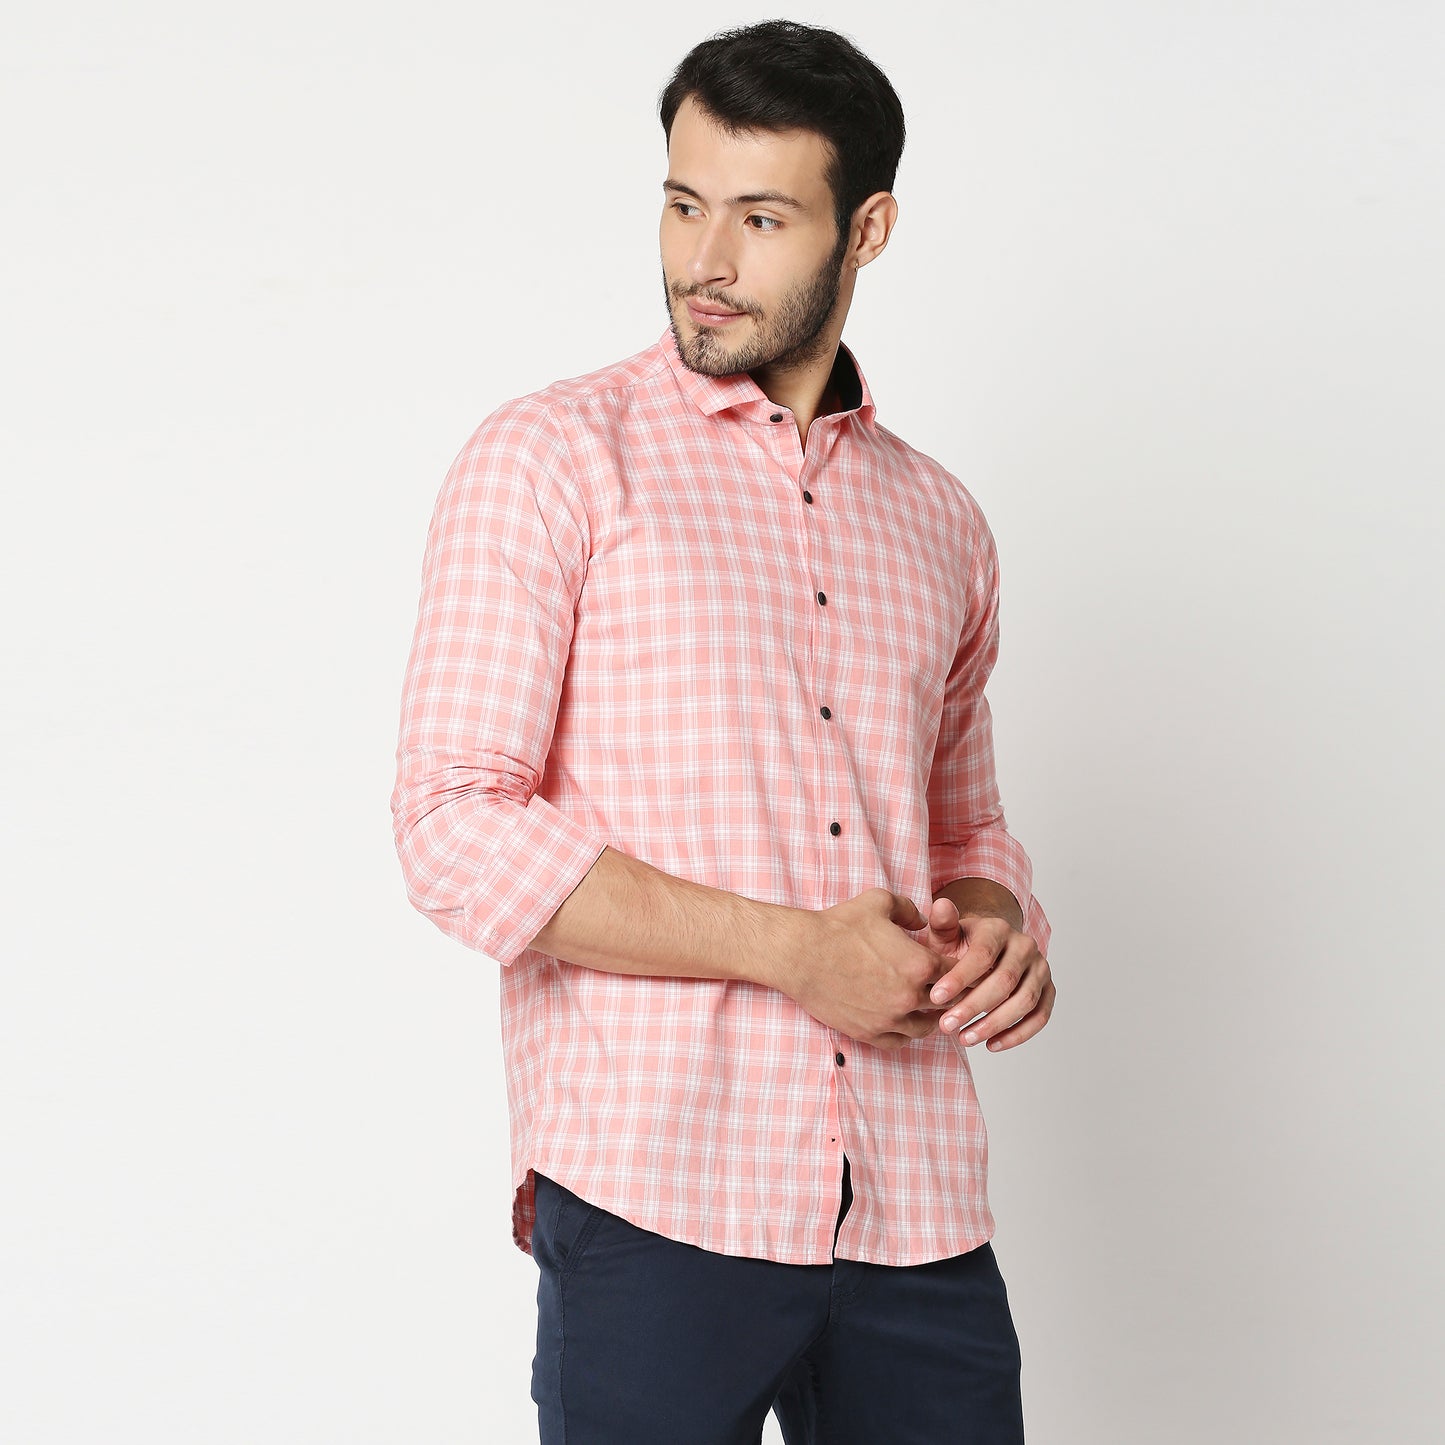 Fostino Pink  Checks  Full Sleeves Shirt - Fostino - Shirts & Tops